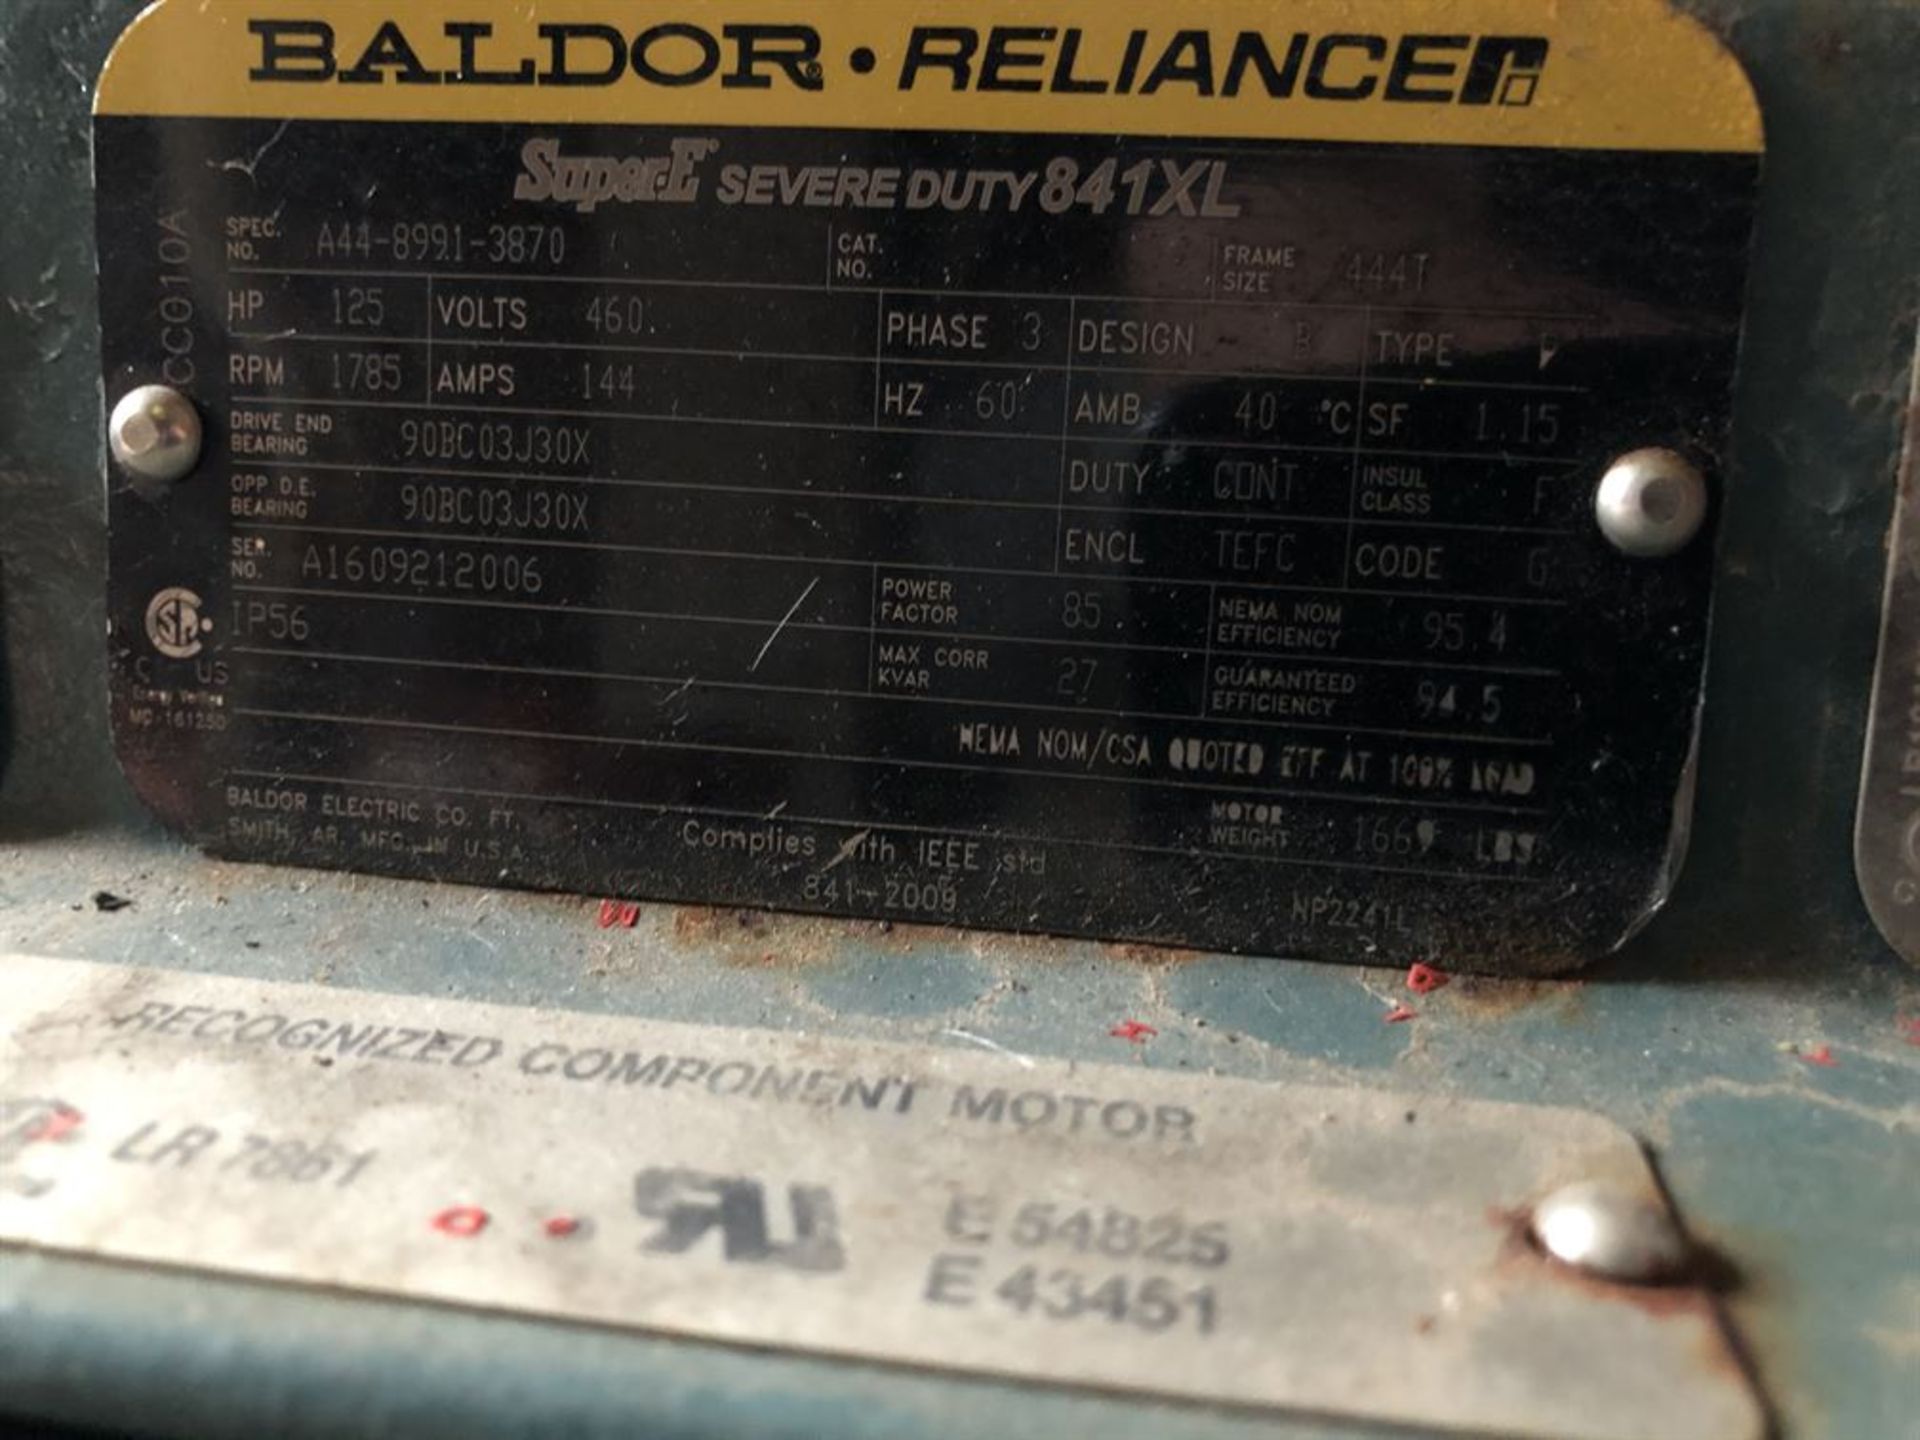 BALDOR 125 HP Electric Motor, w/ Slurry Pump (Location: Bee Hive) - Image 2 of 2